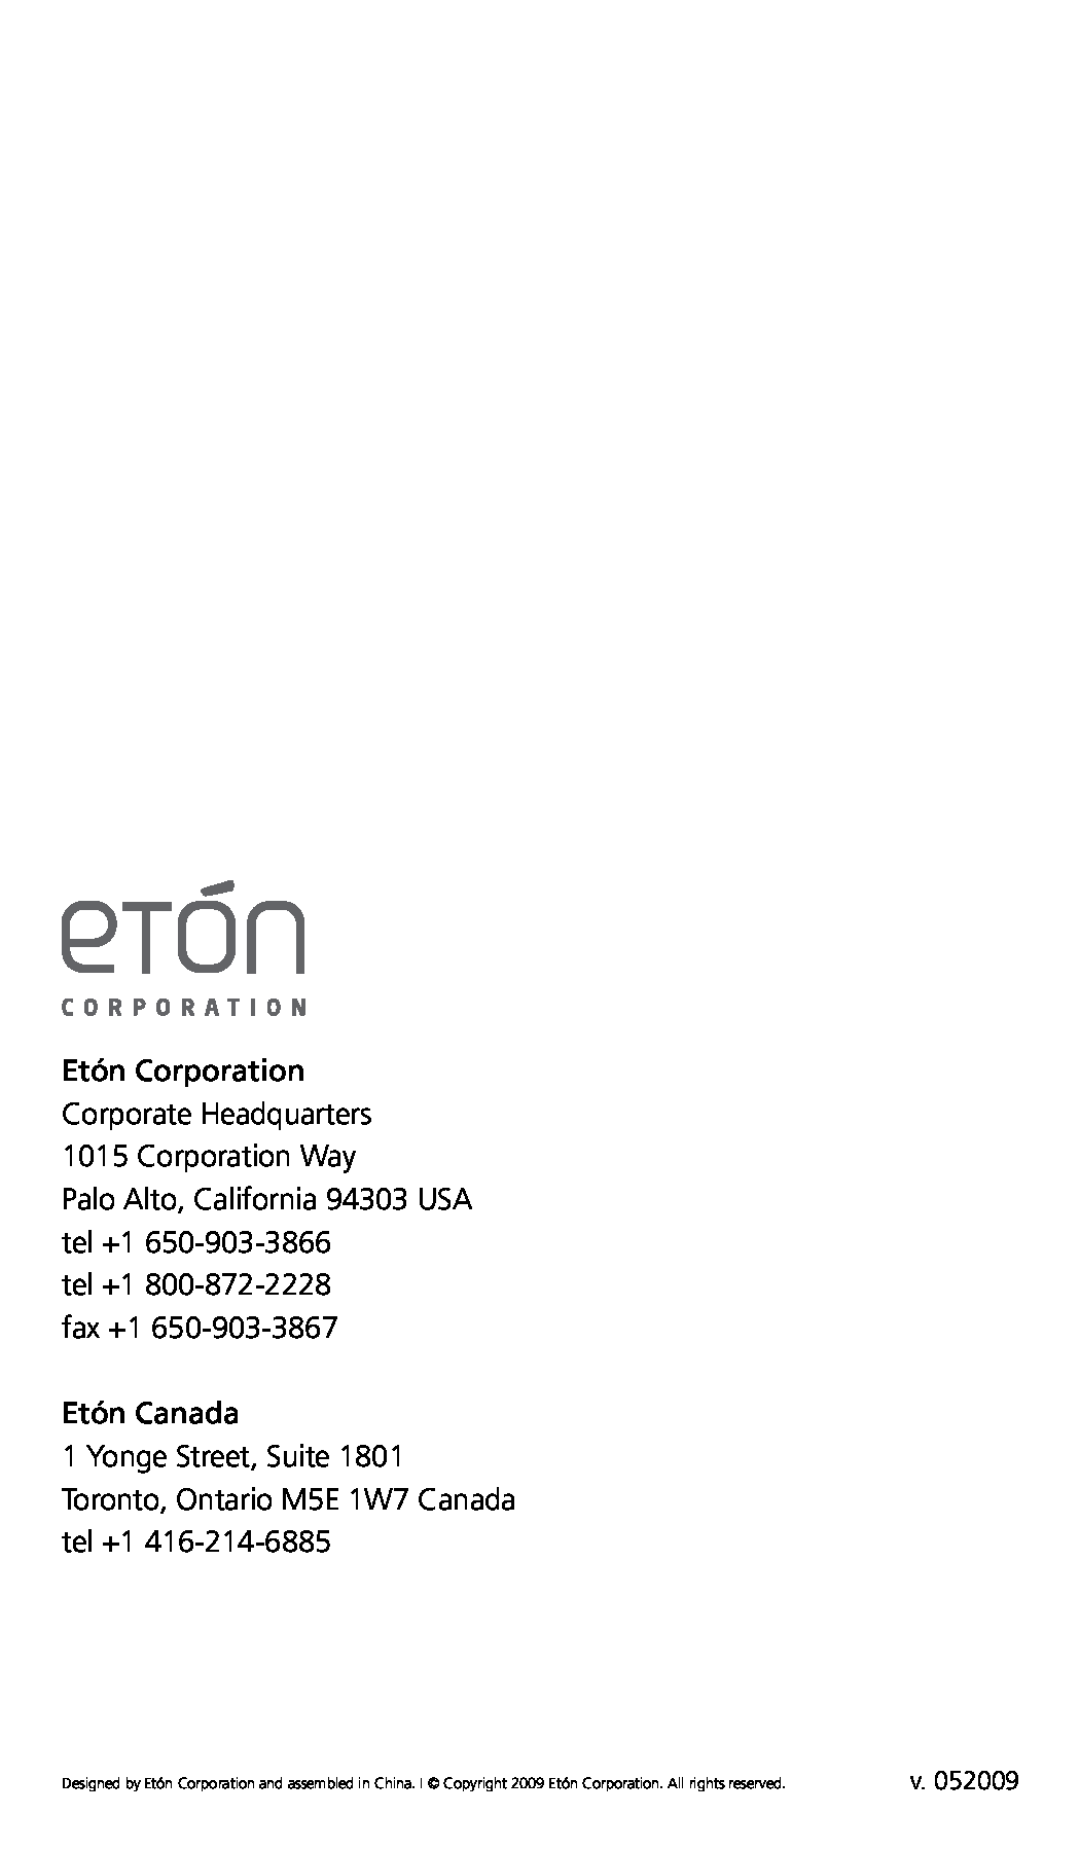 Eton G8 owner manual Etón Corporation Corporate Headquarters, Corporation Way, Palo Alto, California 94303 USA tel +1 